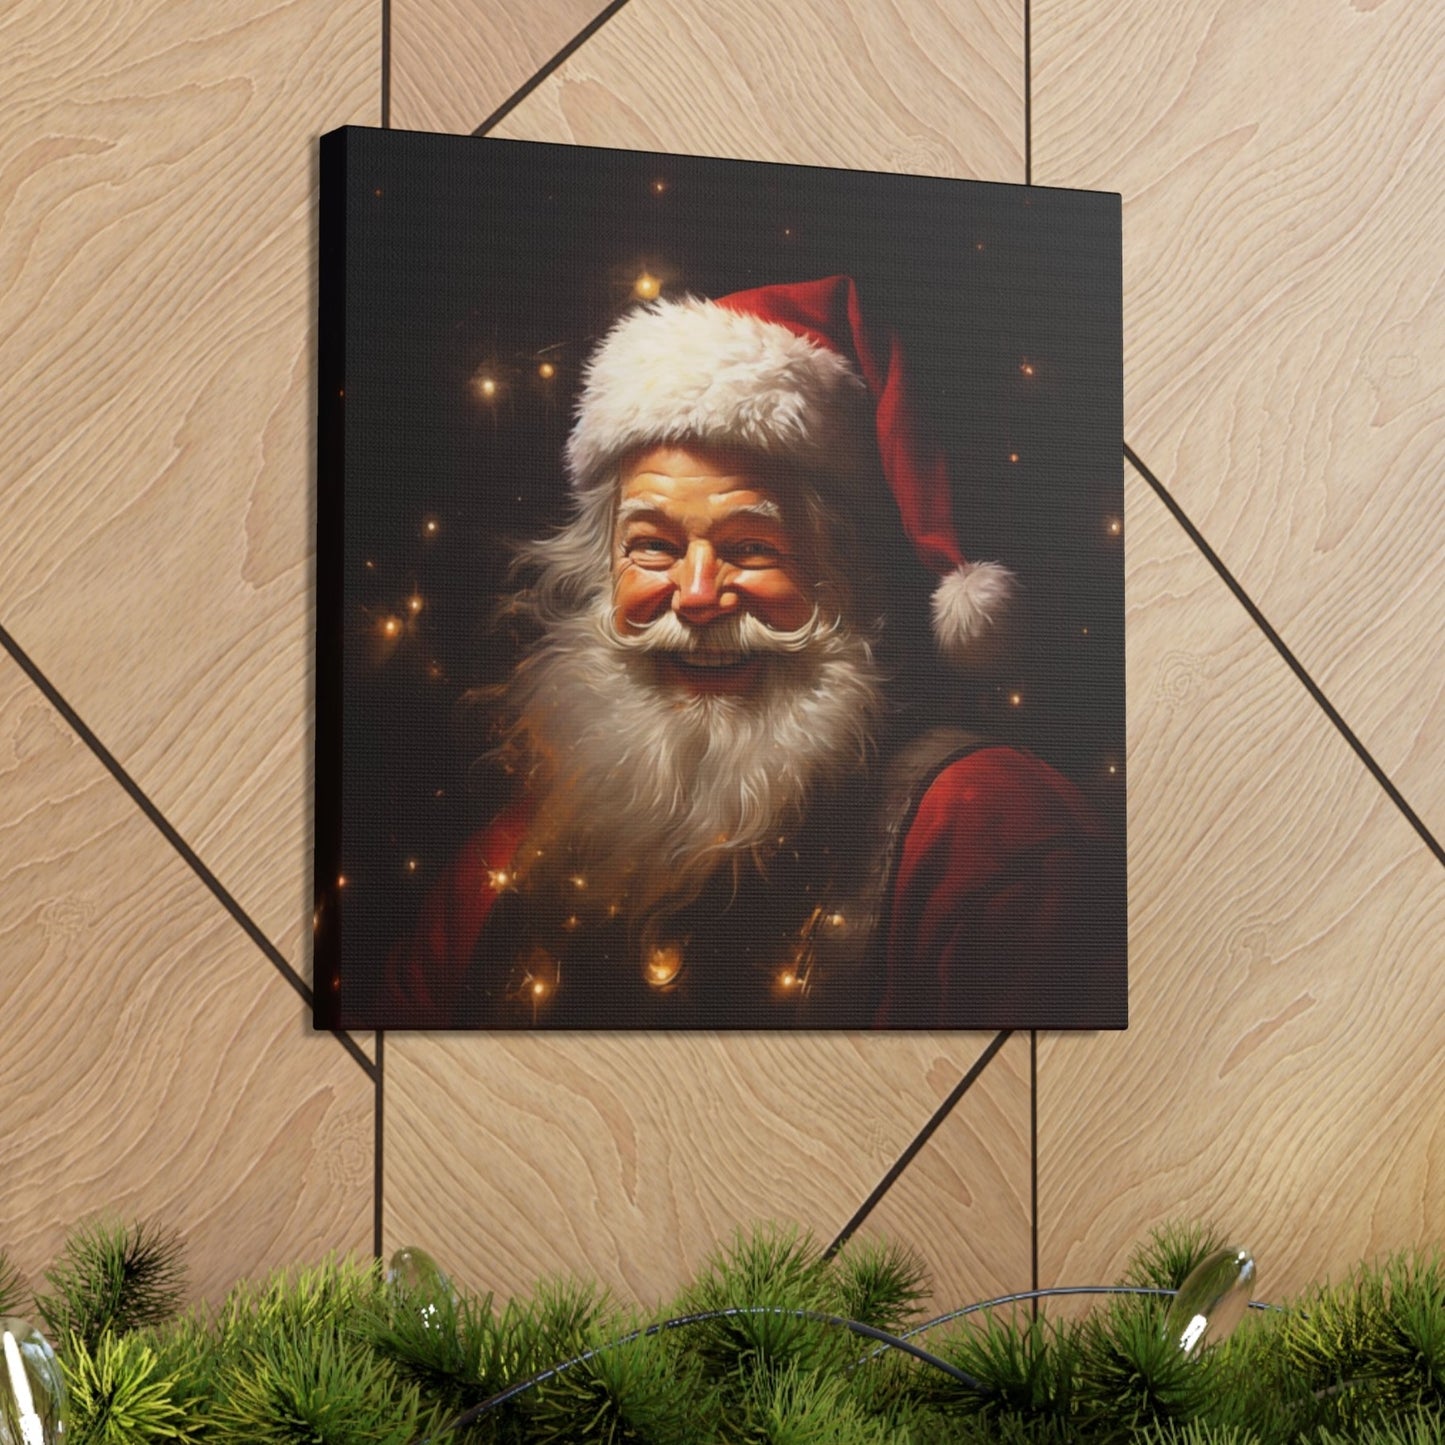  Santa Claus smiling Christmas art print